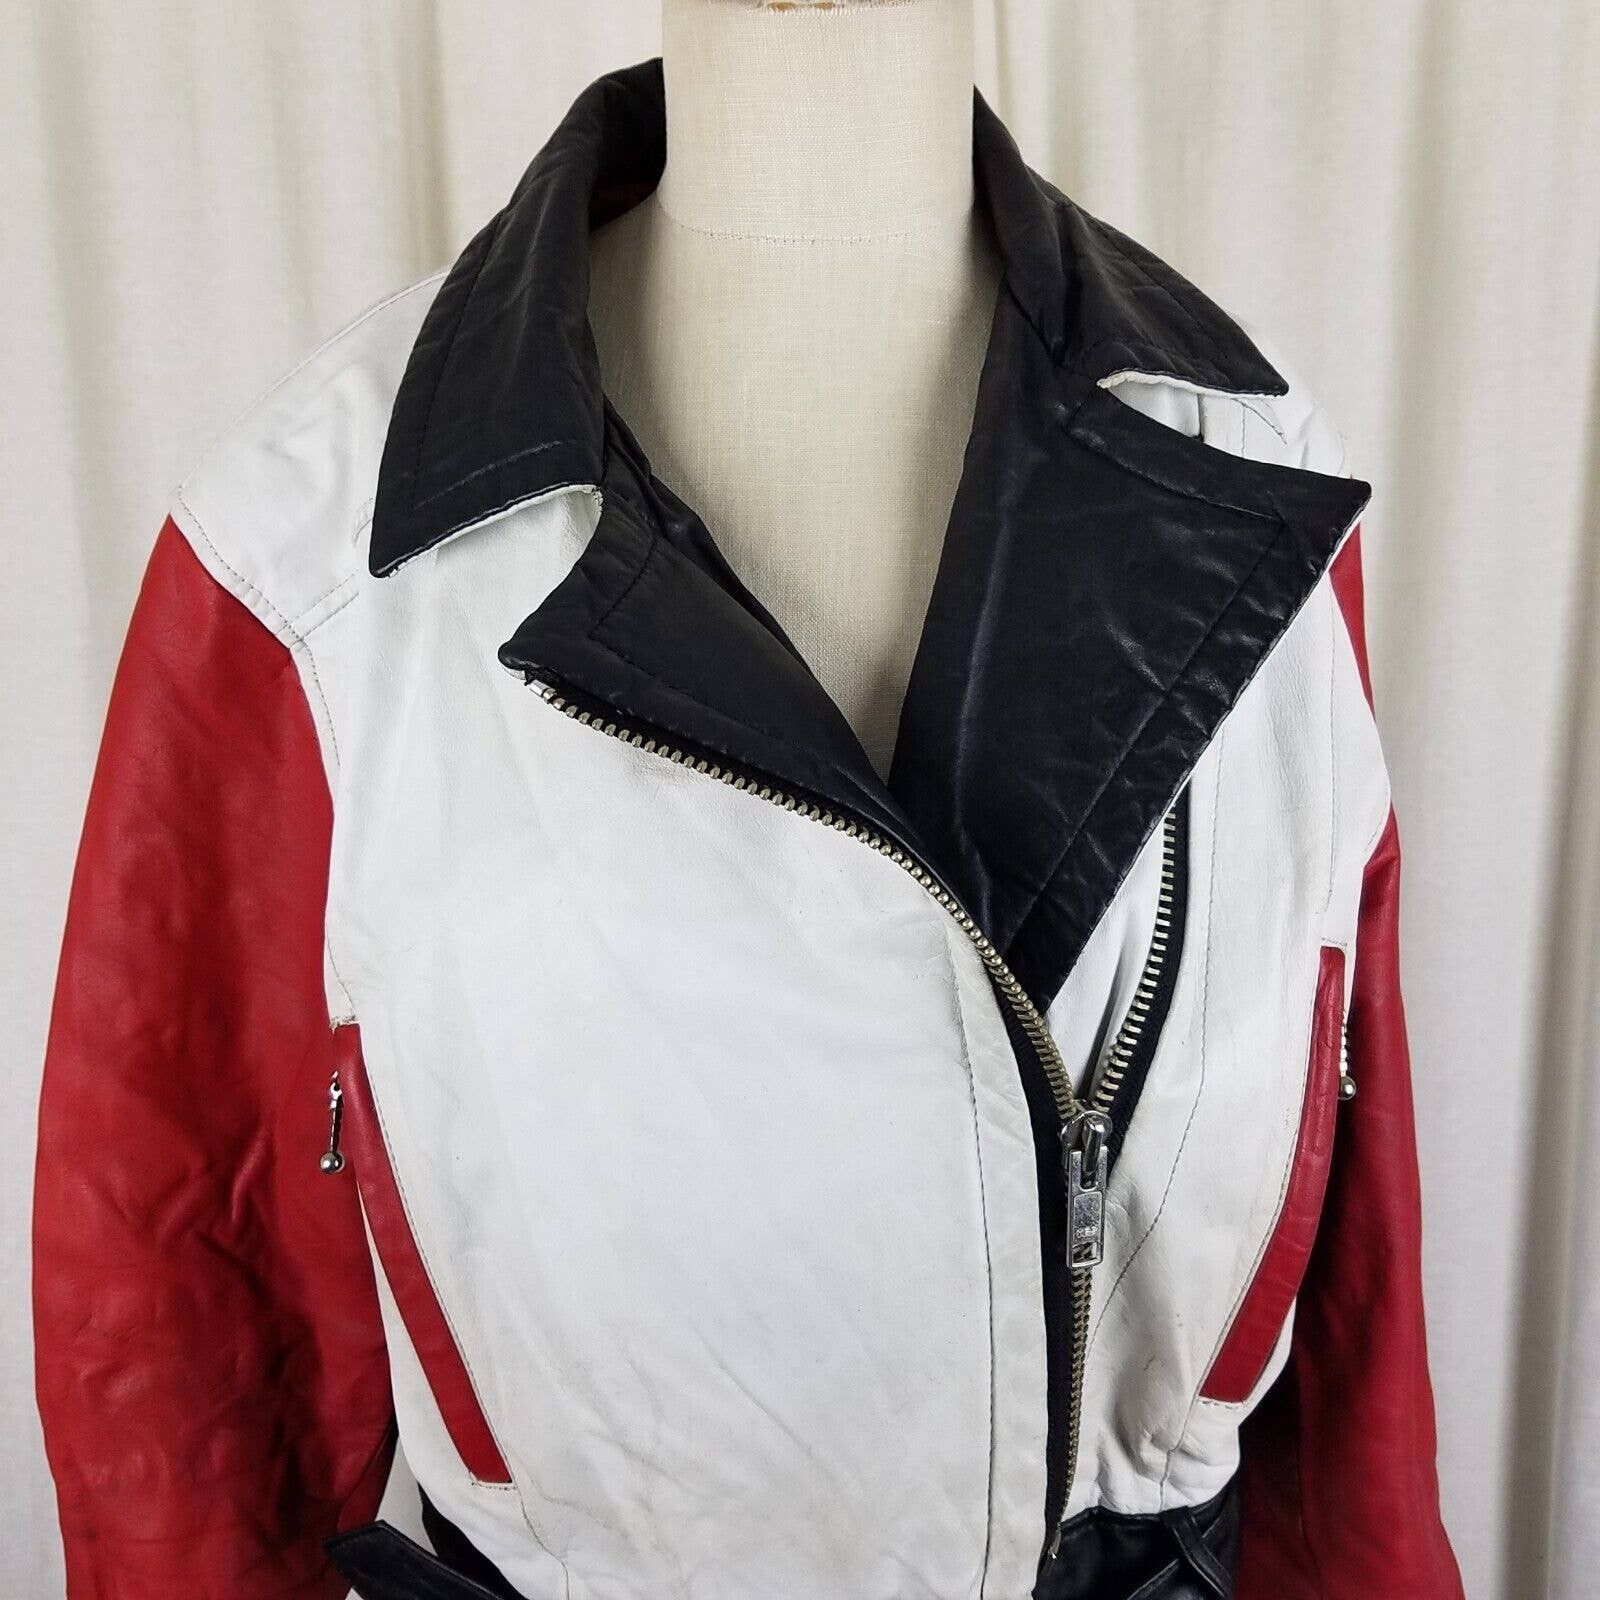 Vintage Chia Colorblock Leather Moto Biker Jacket Belted MJ Thriller Size L / US 10 / IT 46 - 2 Preview